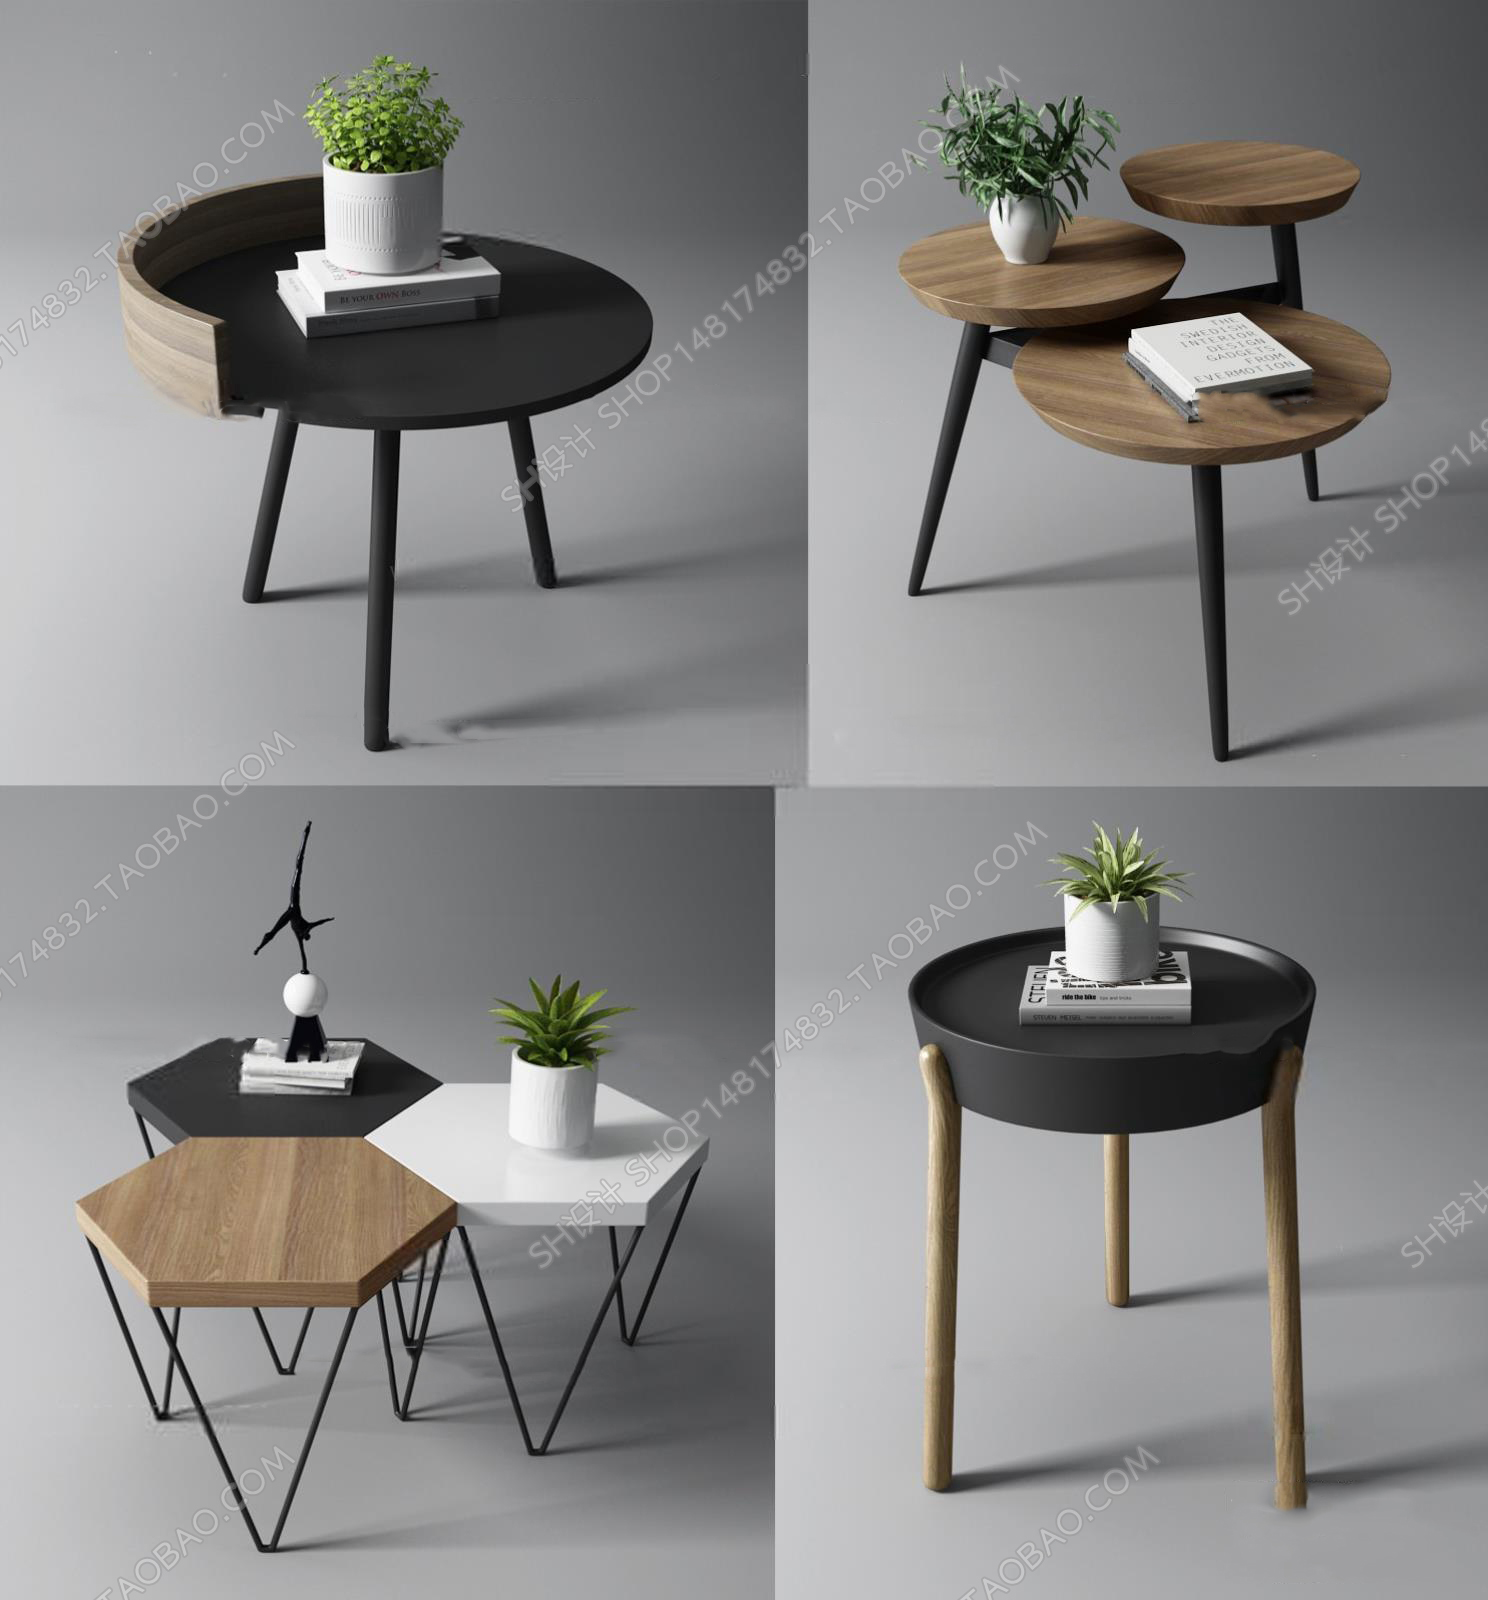 3DSKY MODELS – COFFEE TABLE 3D MODELS – 019 - thumbnail 1